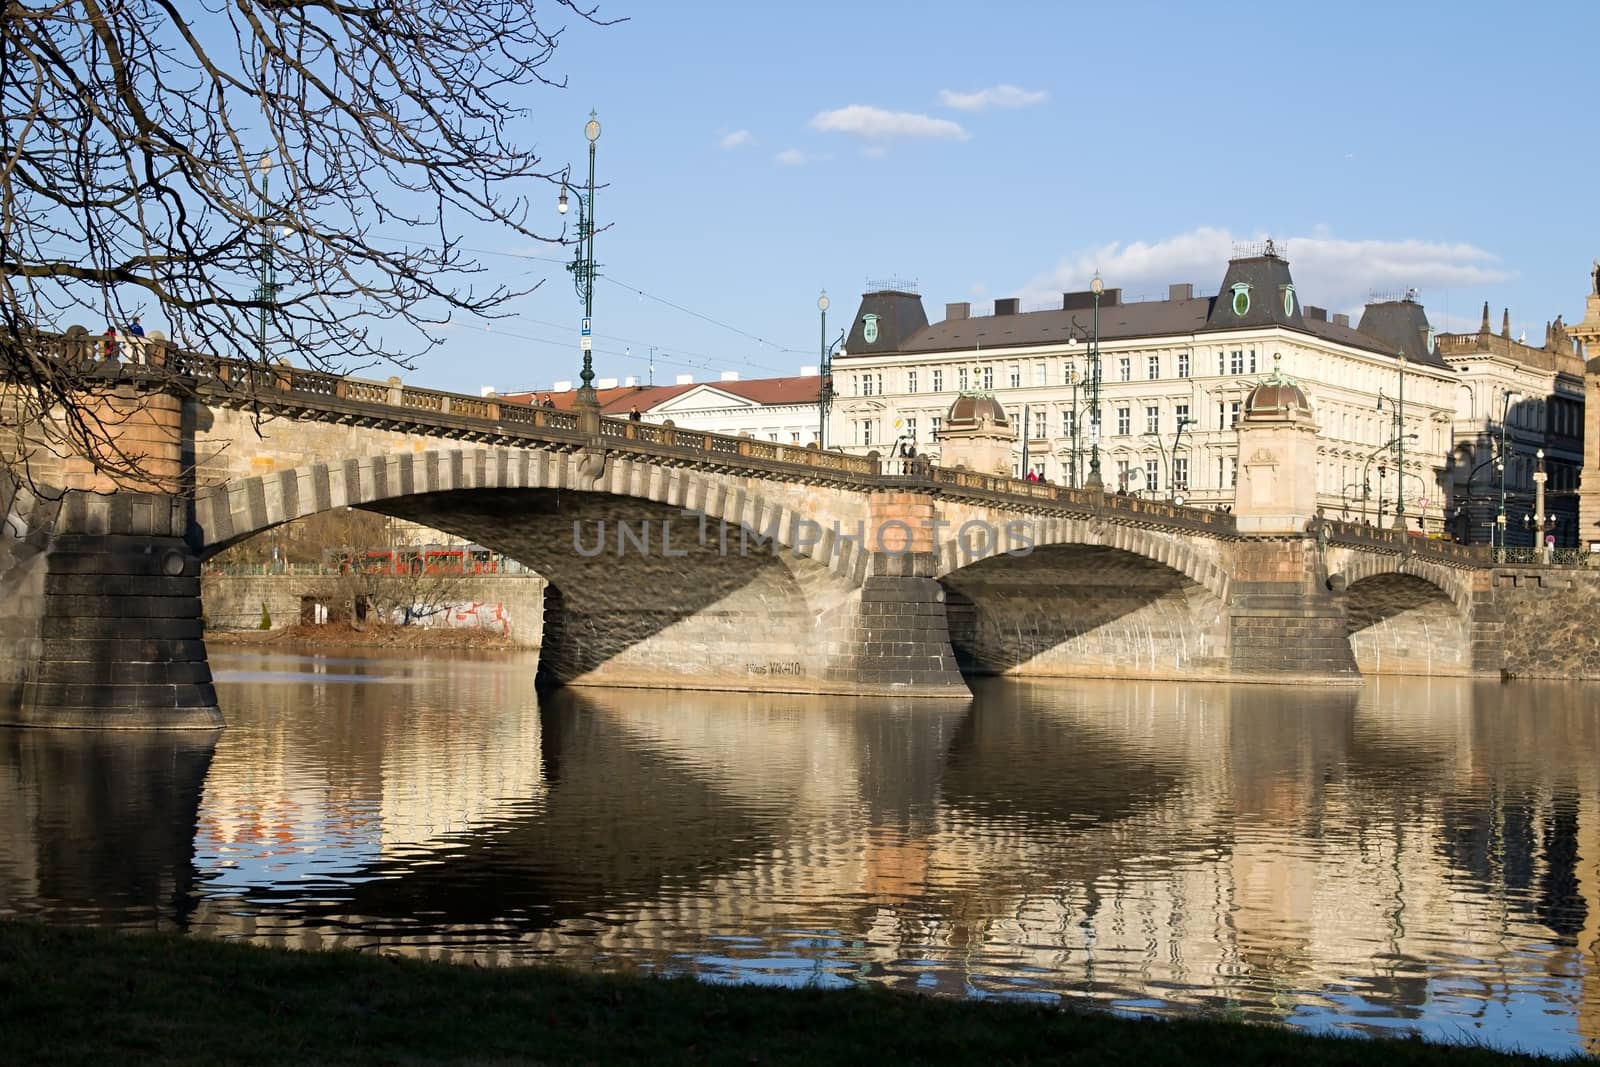 Prague and its old houses, Vltava river and bridges by Dermot68